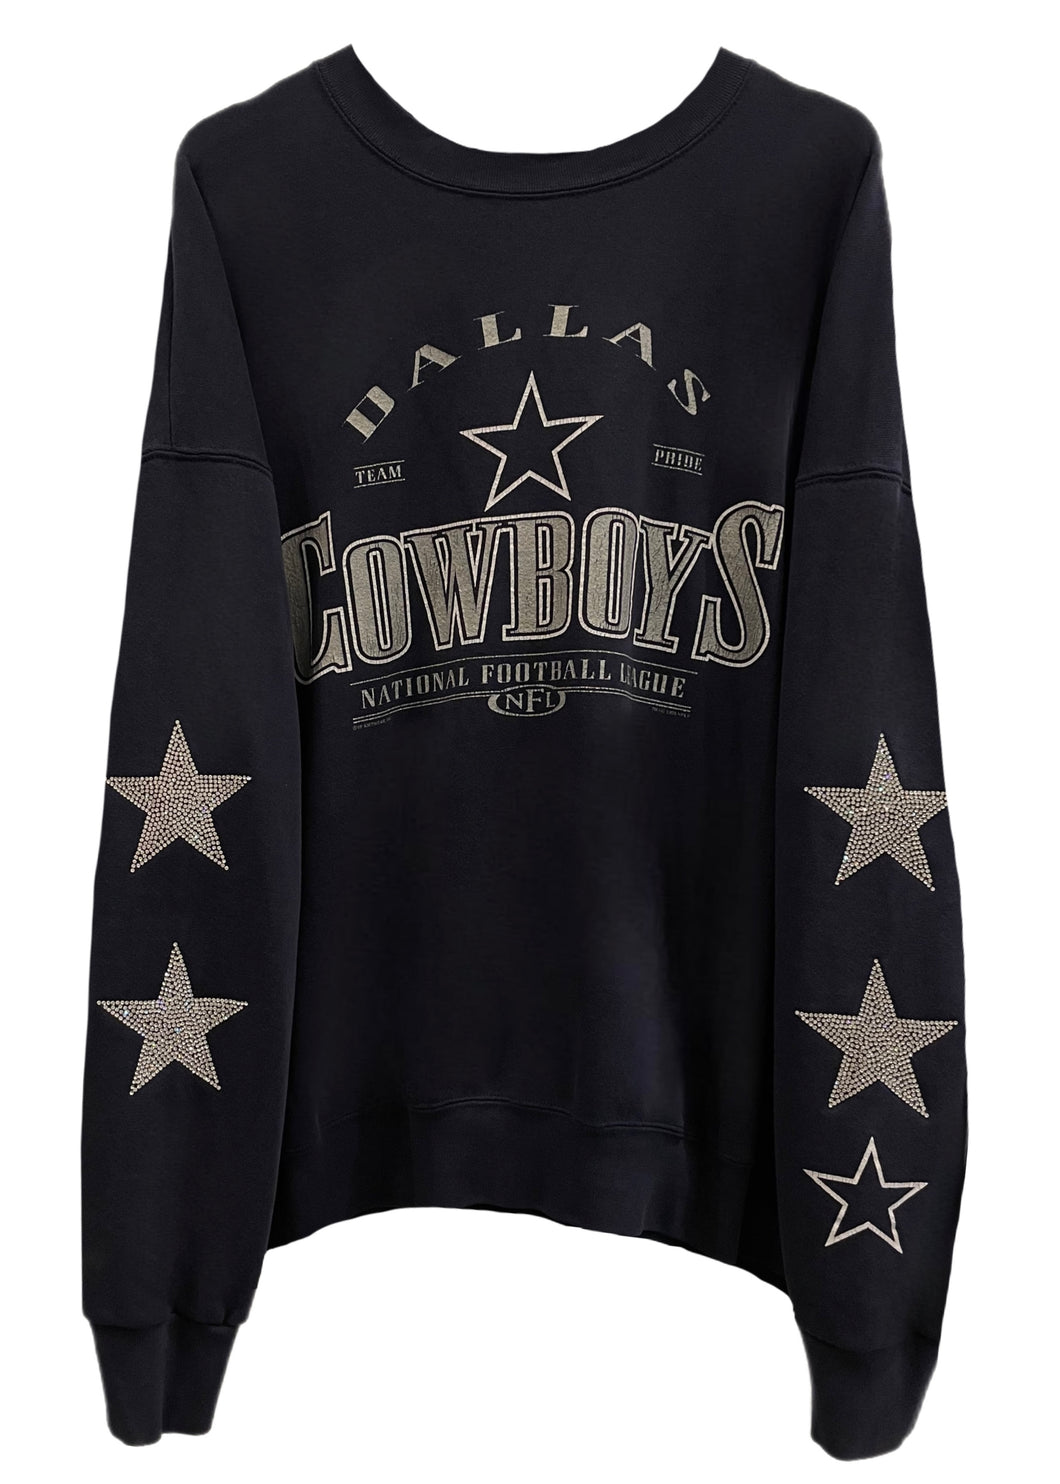 Dallas Cowboys, NFL One of a KIND Vintage Sweatshirt with Crystal Star Design